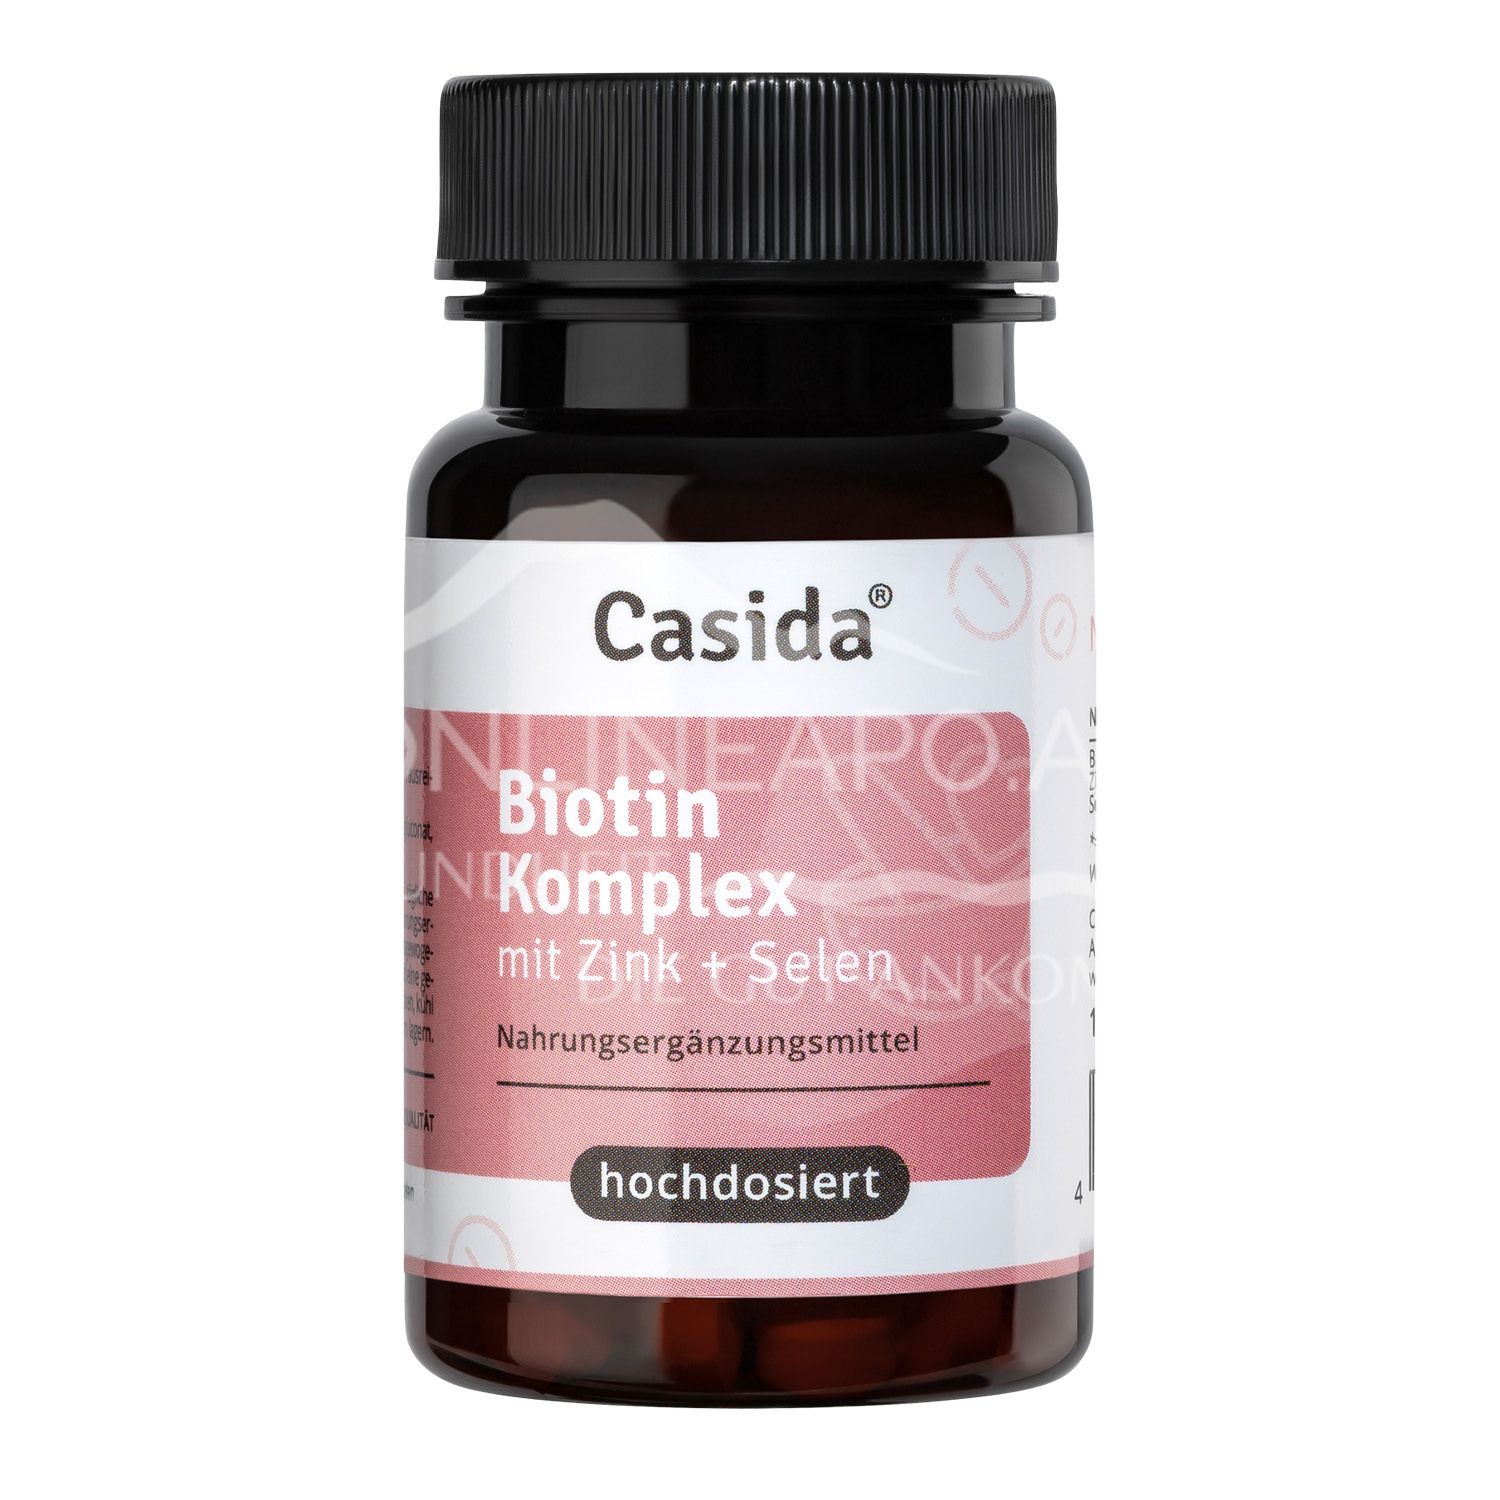 Casida Biotin Komplex mit Zink + Selen Kapseln